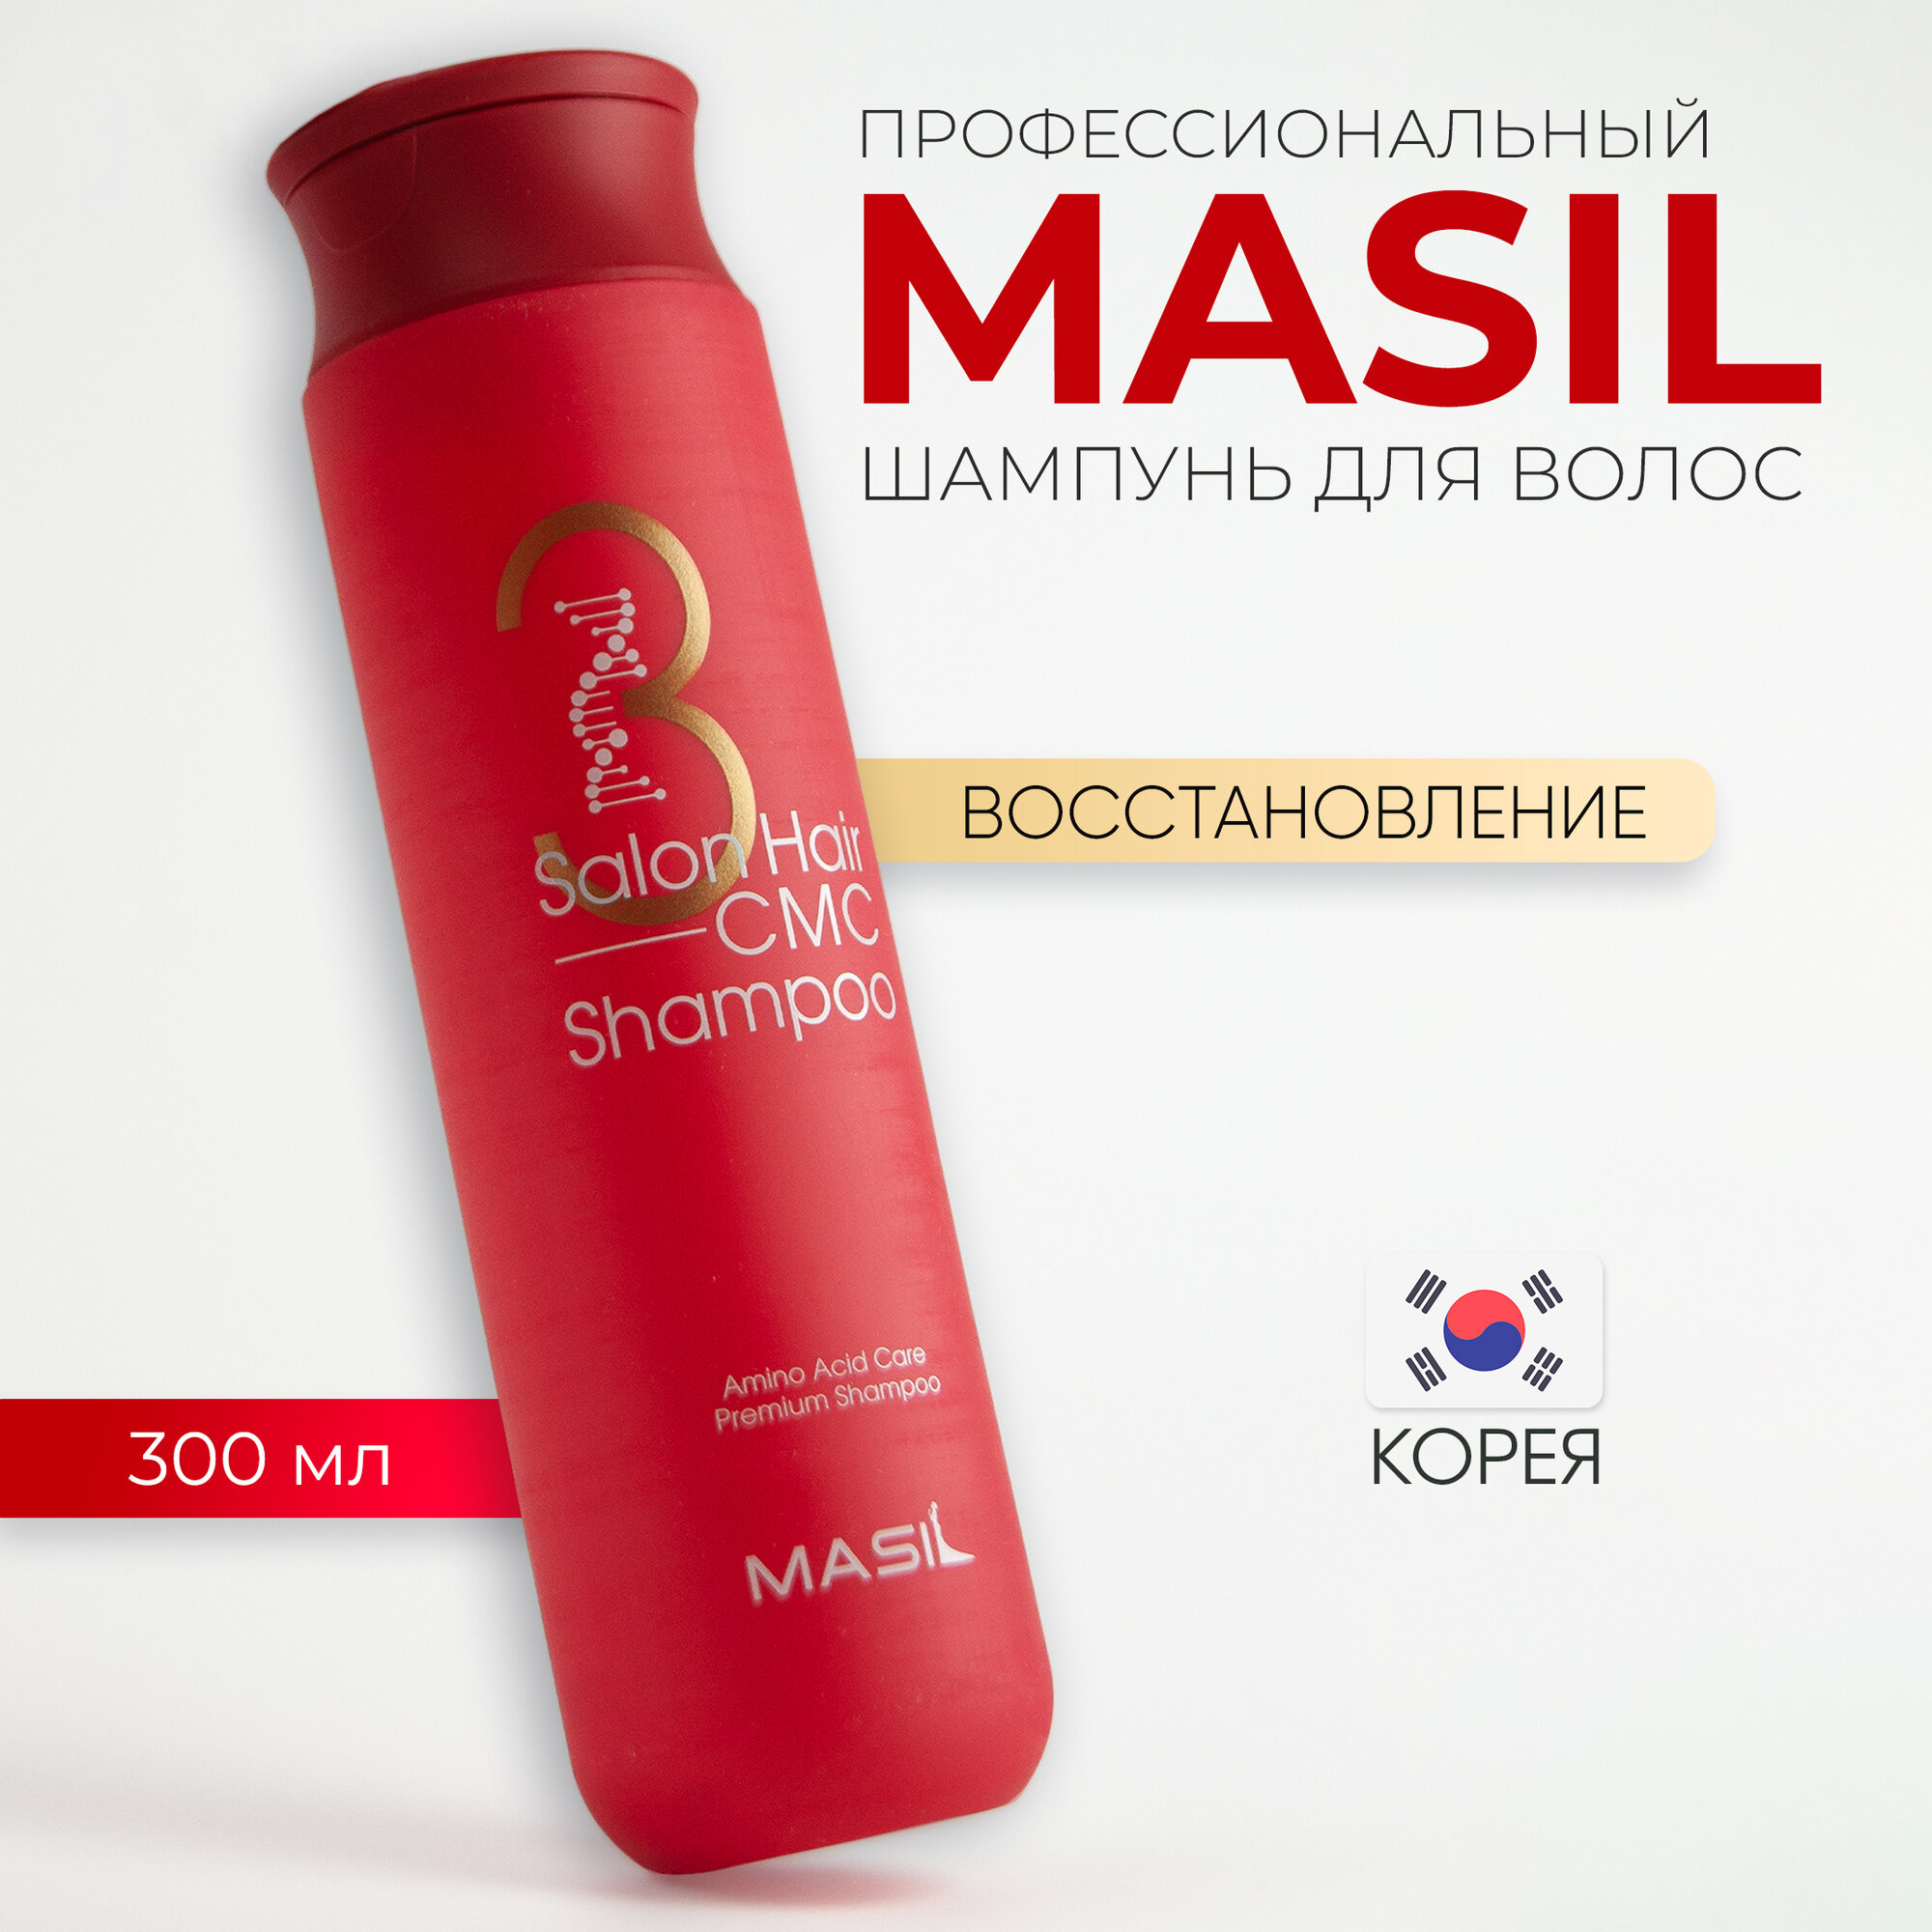 Masil Шампунь для волос с аминокислотами Masil 3 Salon Hair Cmc Shampoo, 300 мл